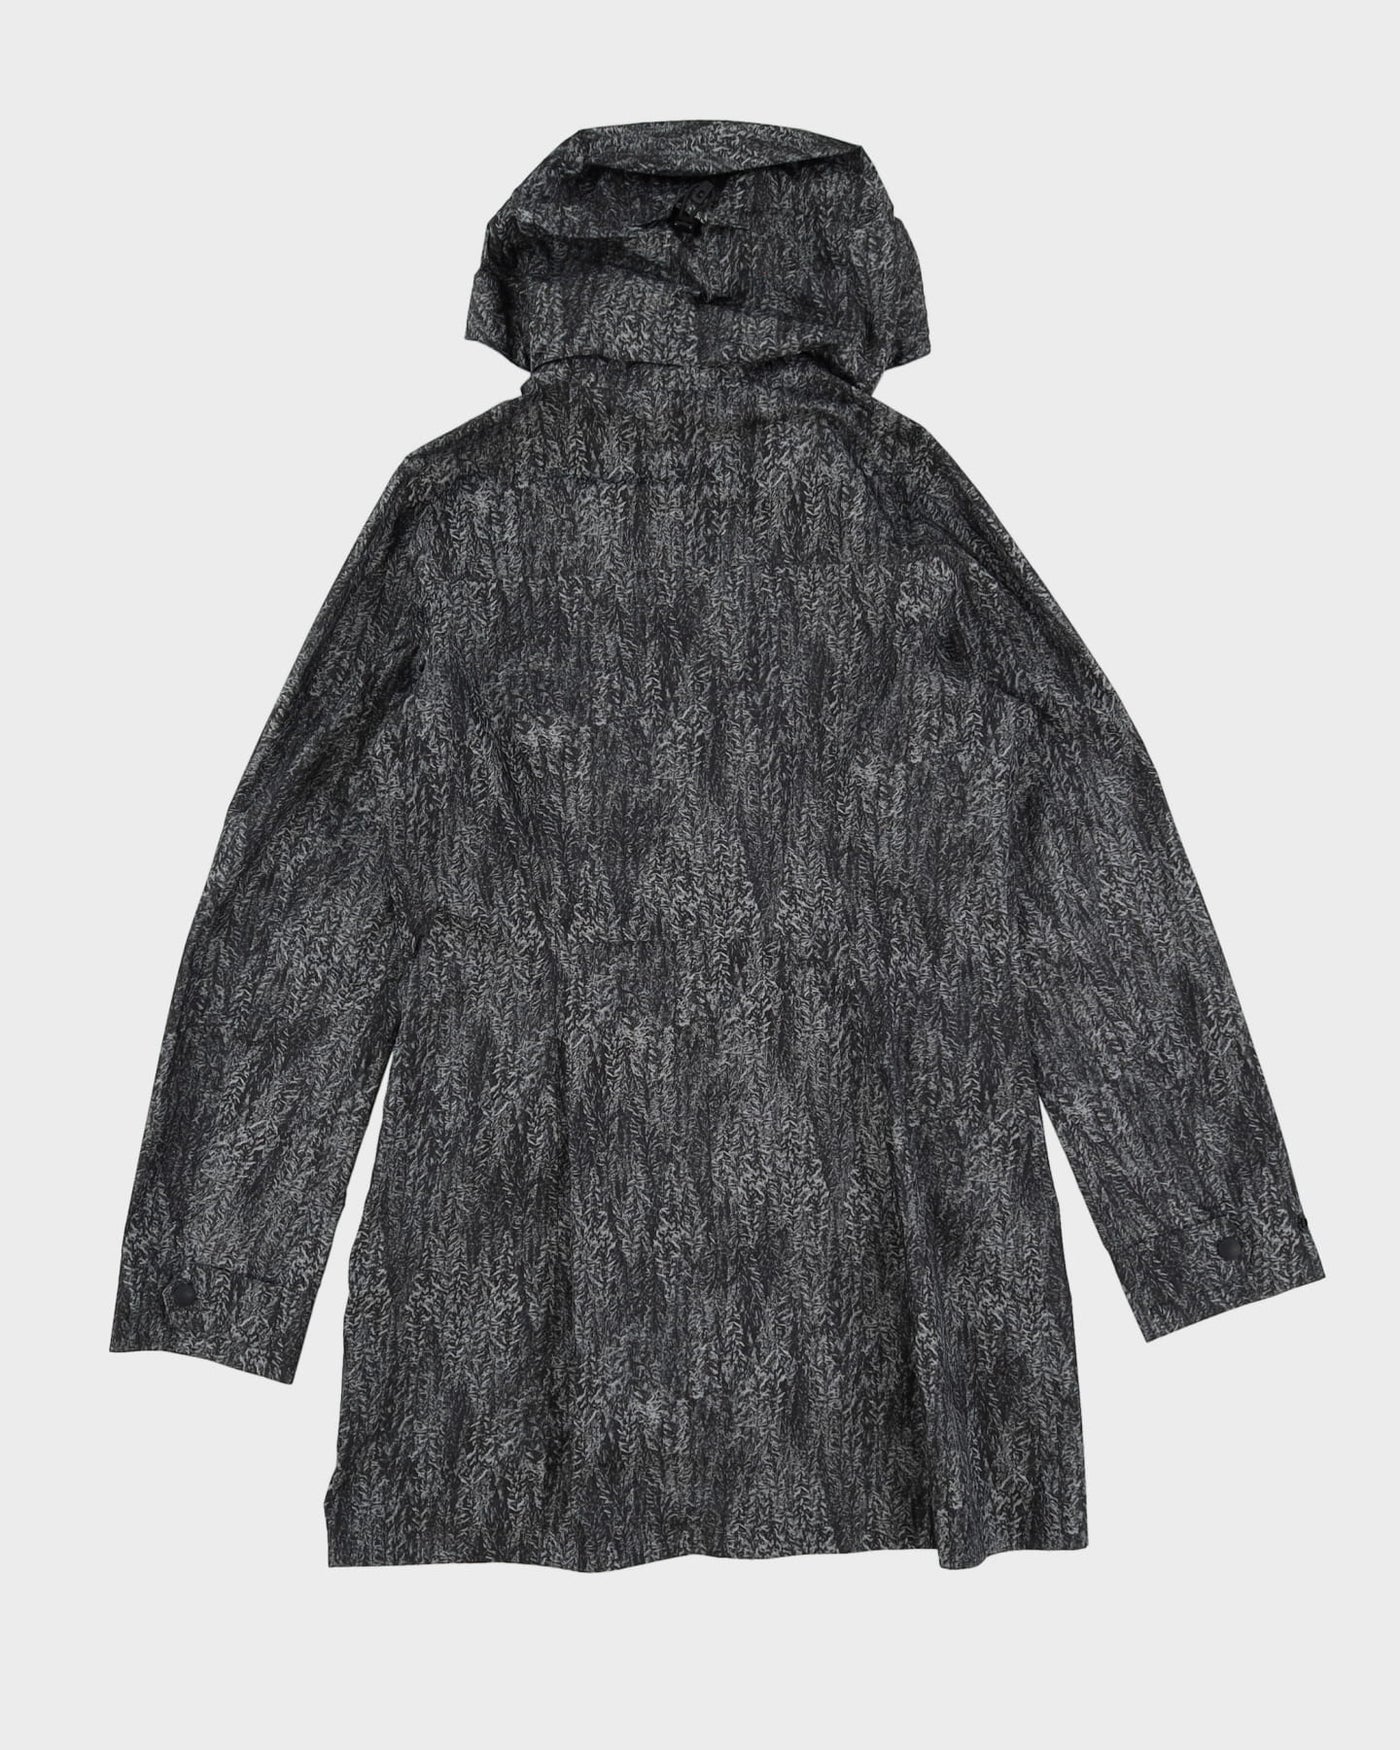 00s Patagonia Grey / Black Patterned Hooded Anorak Rain Jacket - S